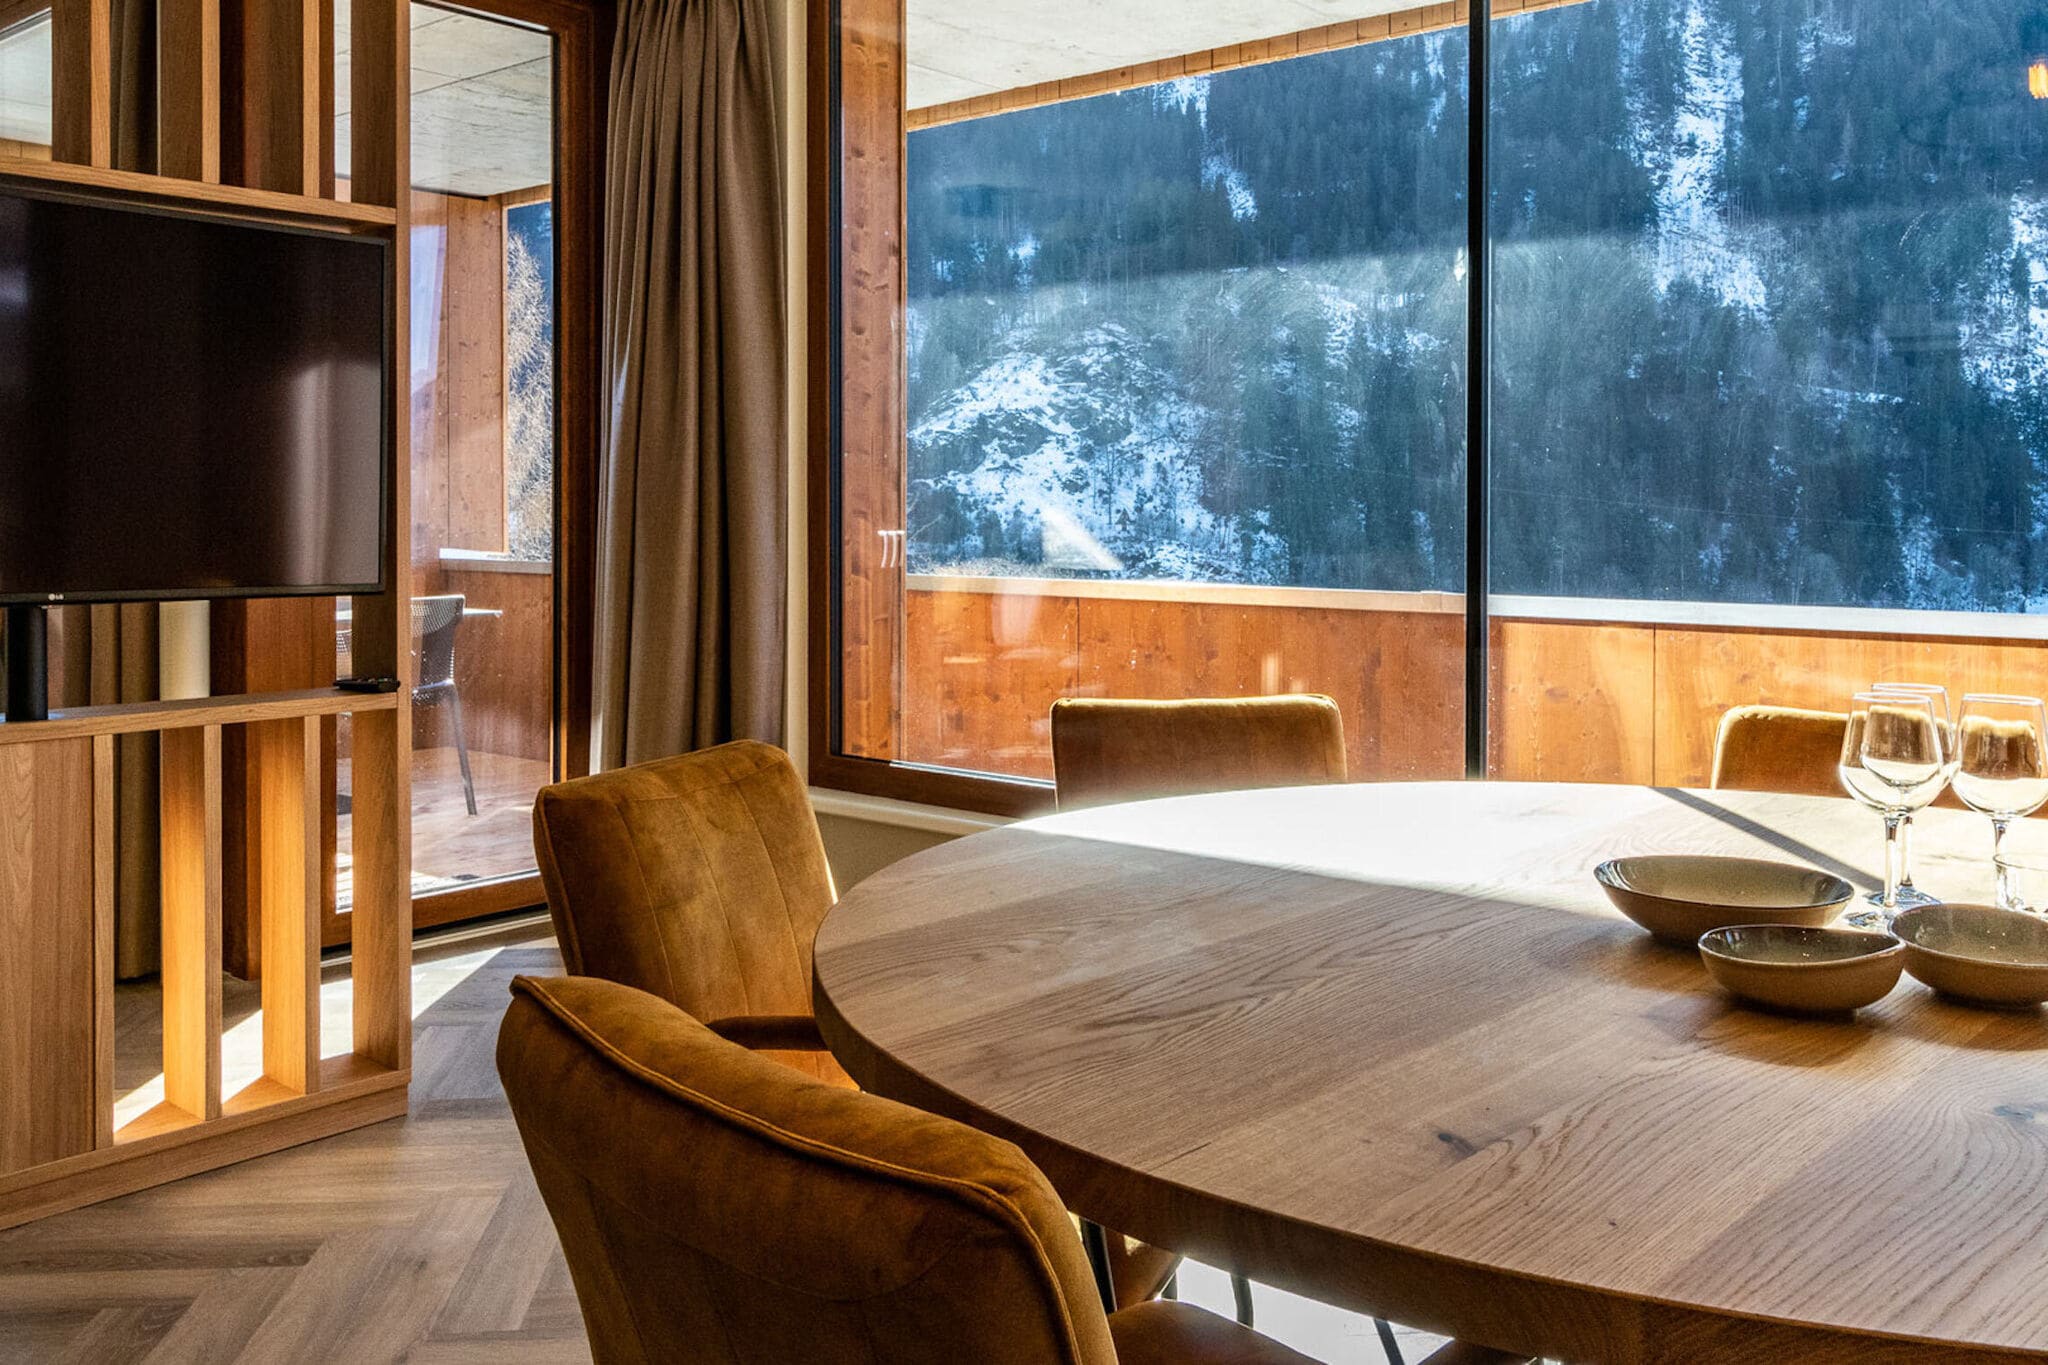 Spacious apartment with sauna, ski area at 600 m.